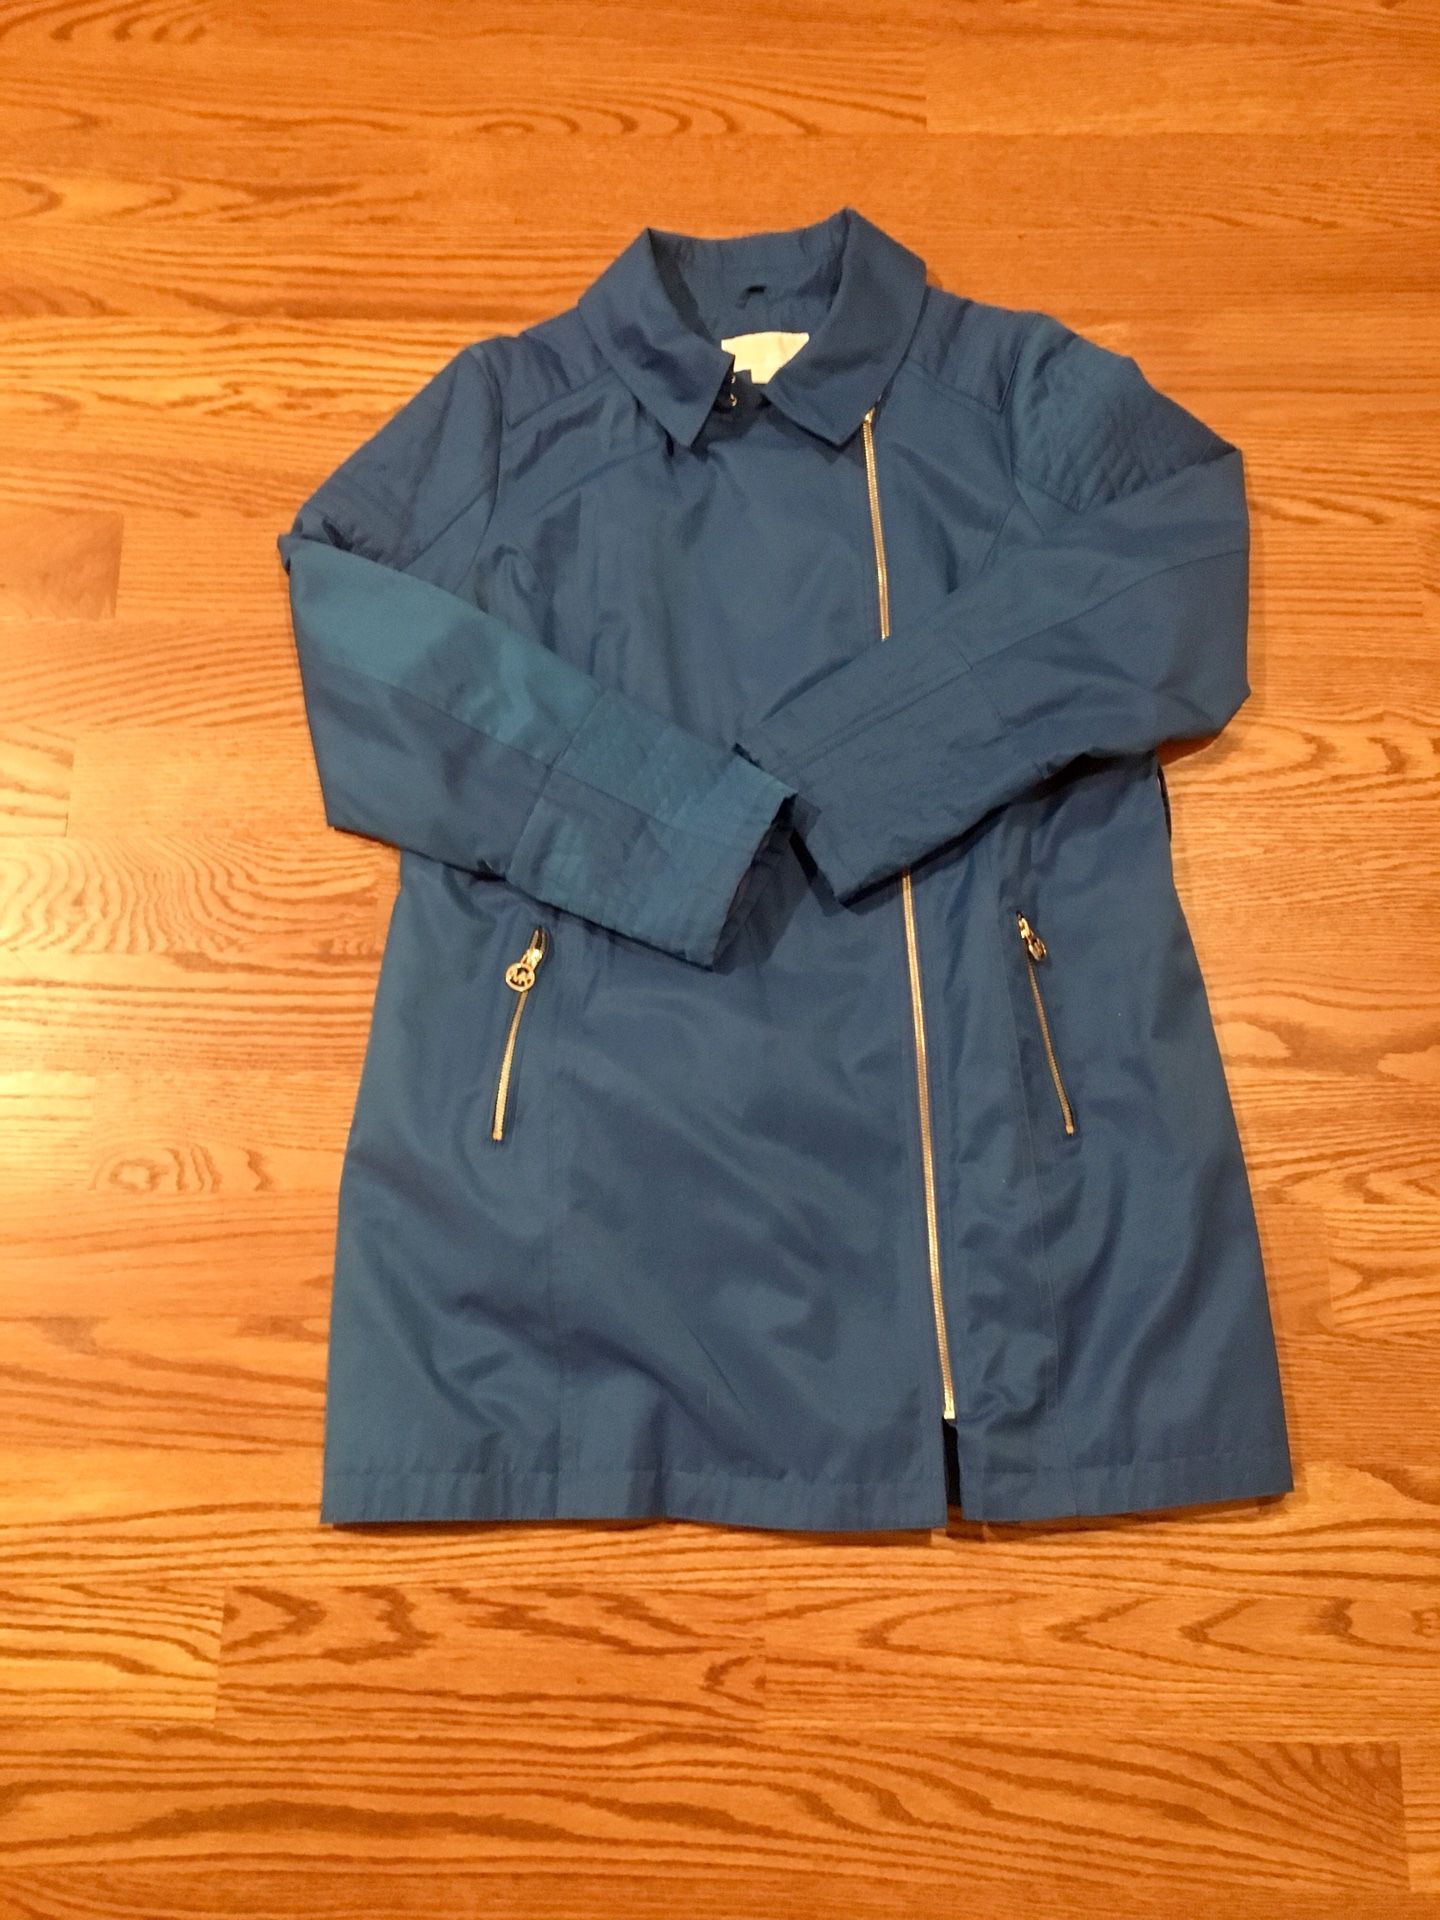 NWT Michael Kors Trench Coat Size XL